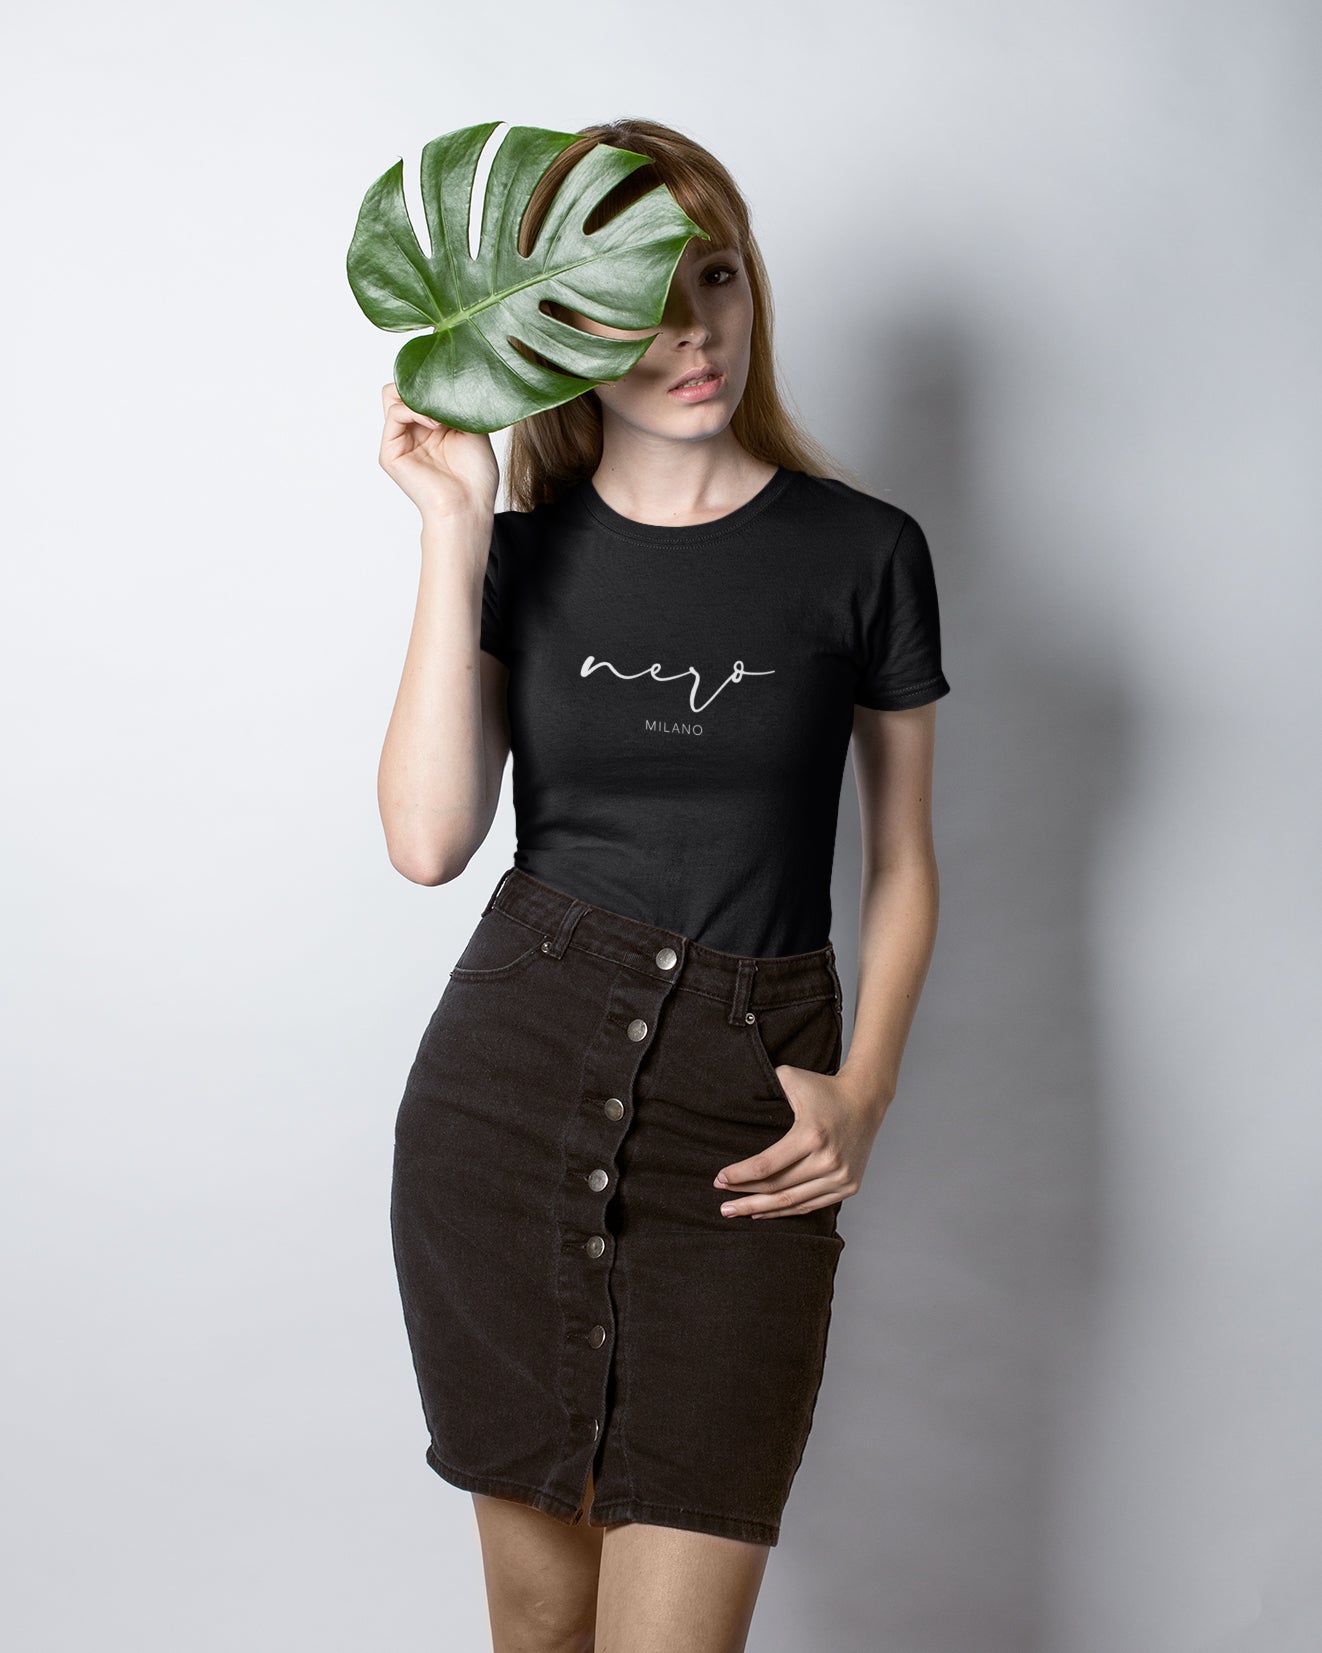 Nero Milano - Women's Relaxed Black T-Shirt